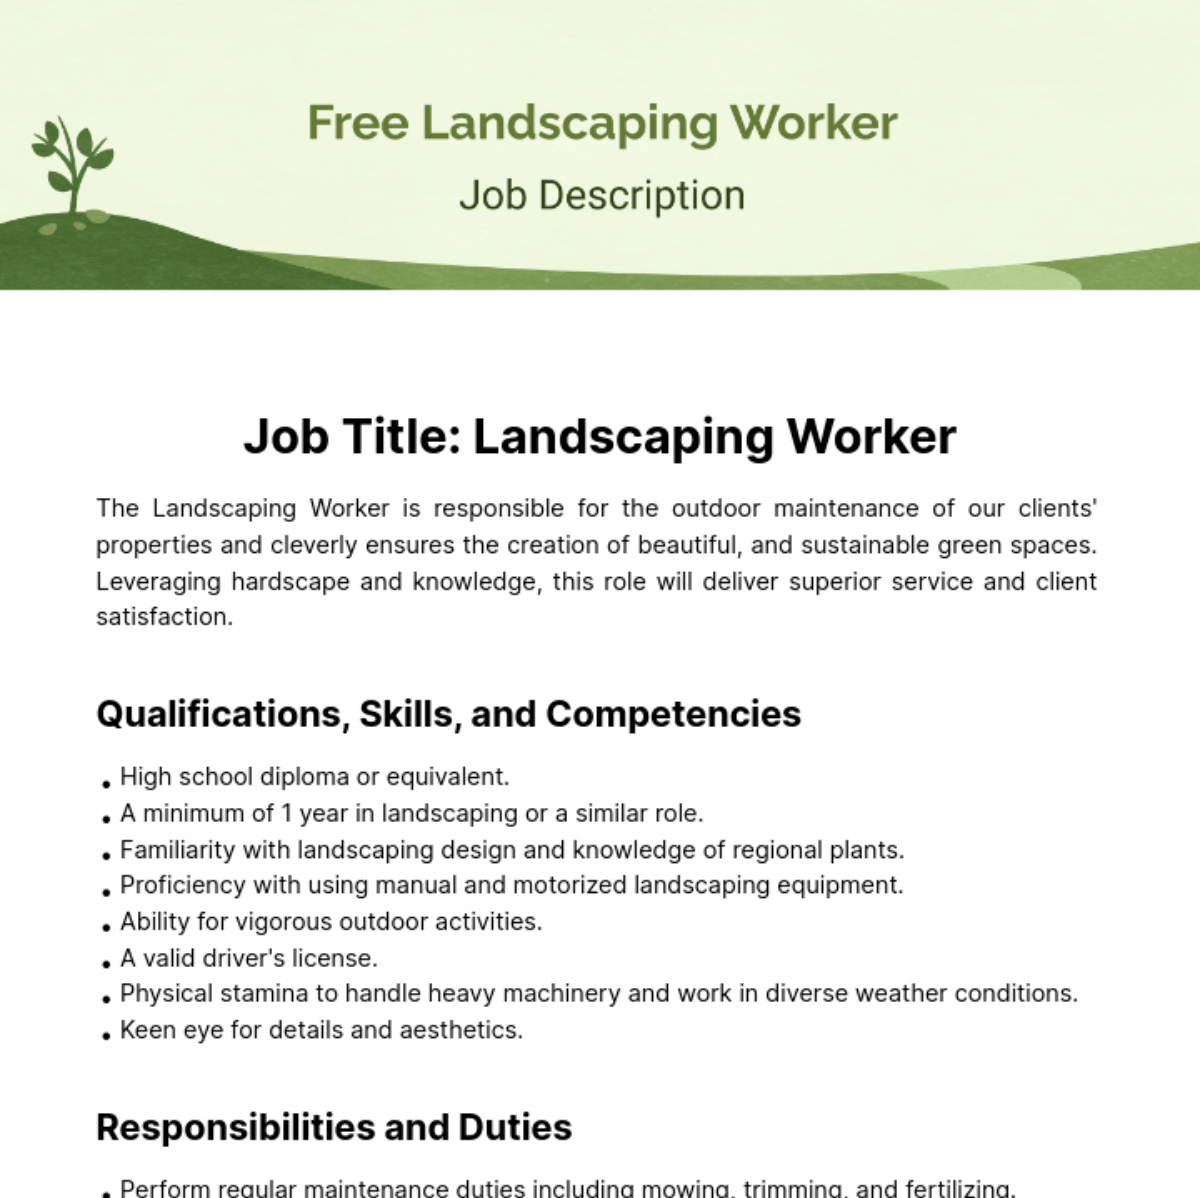 Free Landscaping Worker Job Description Template